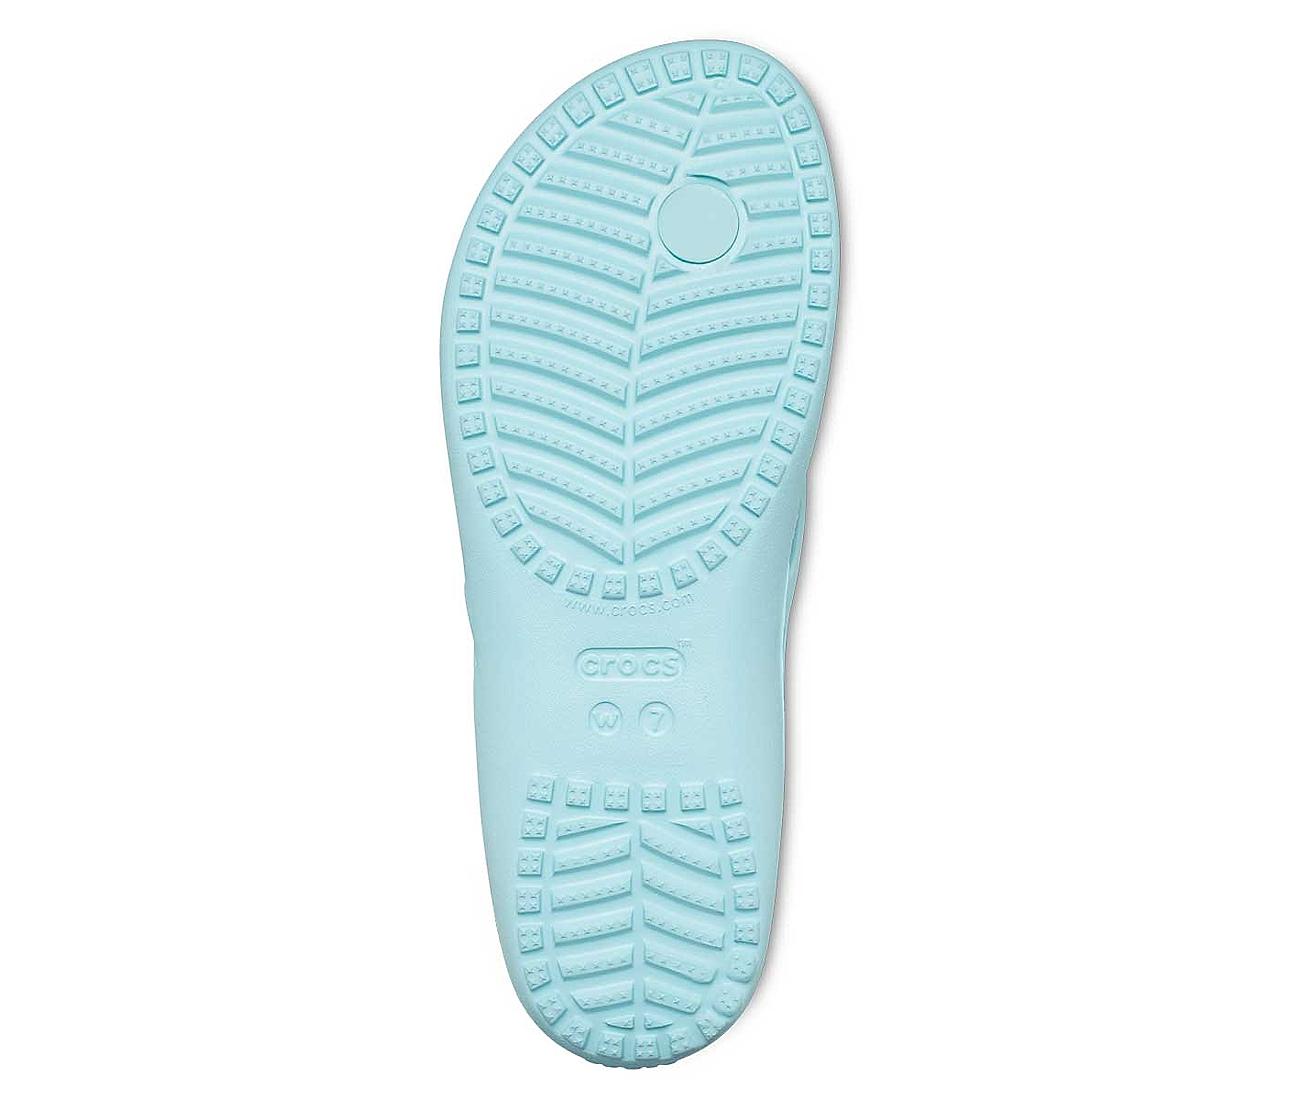 Buy Crocs Women's Sky Blue Kadee II Online at Regal Shoes |8276157